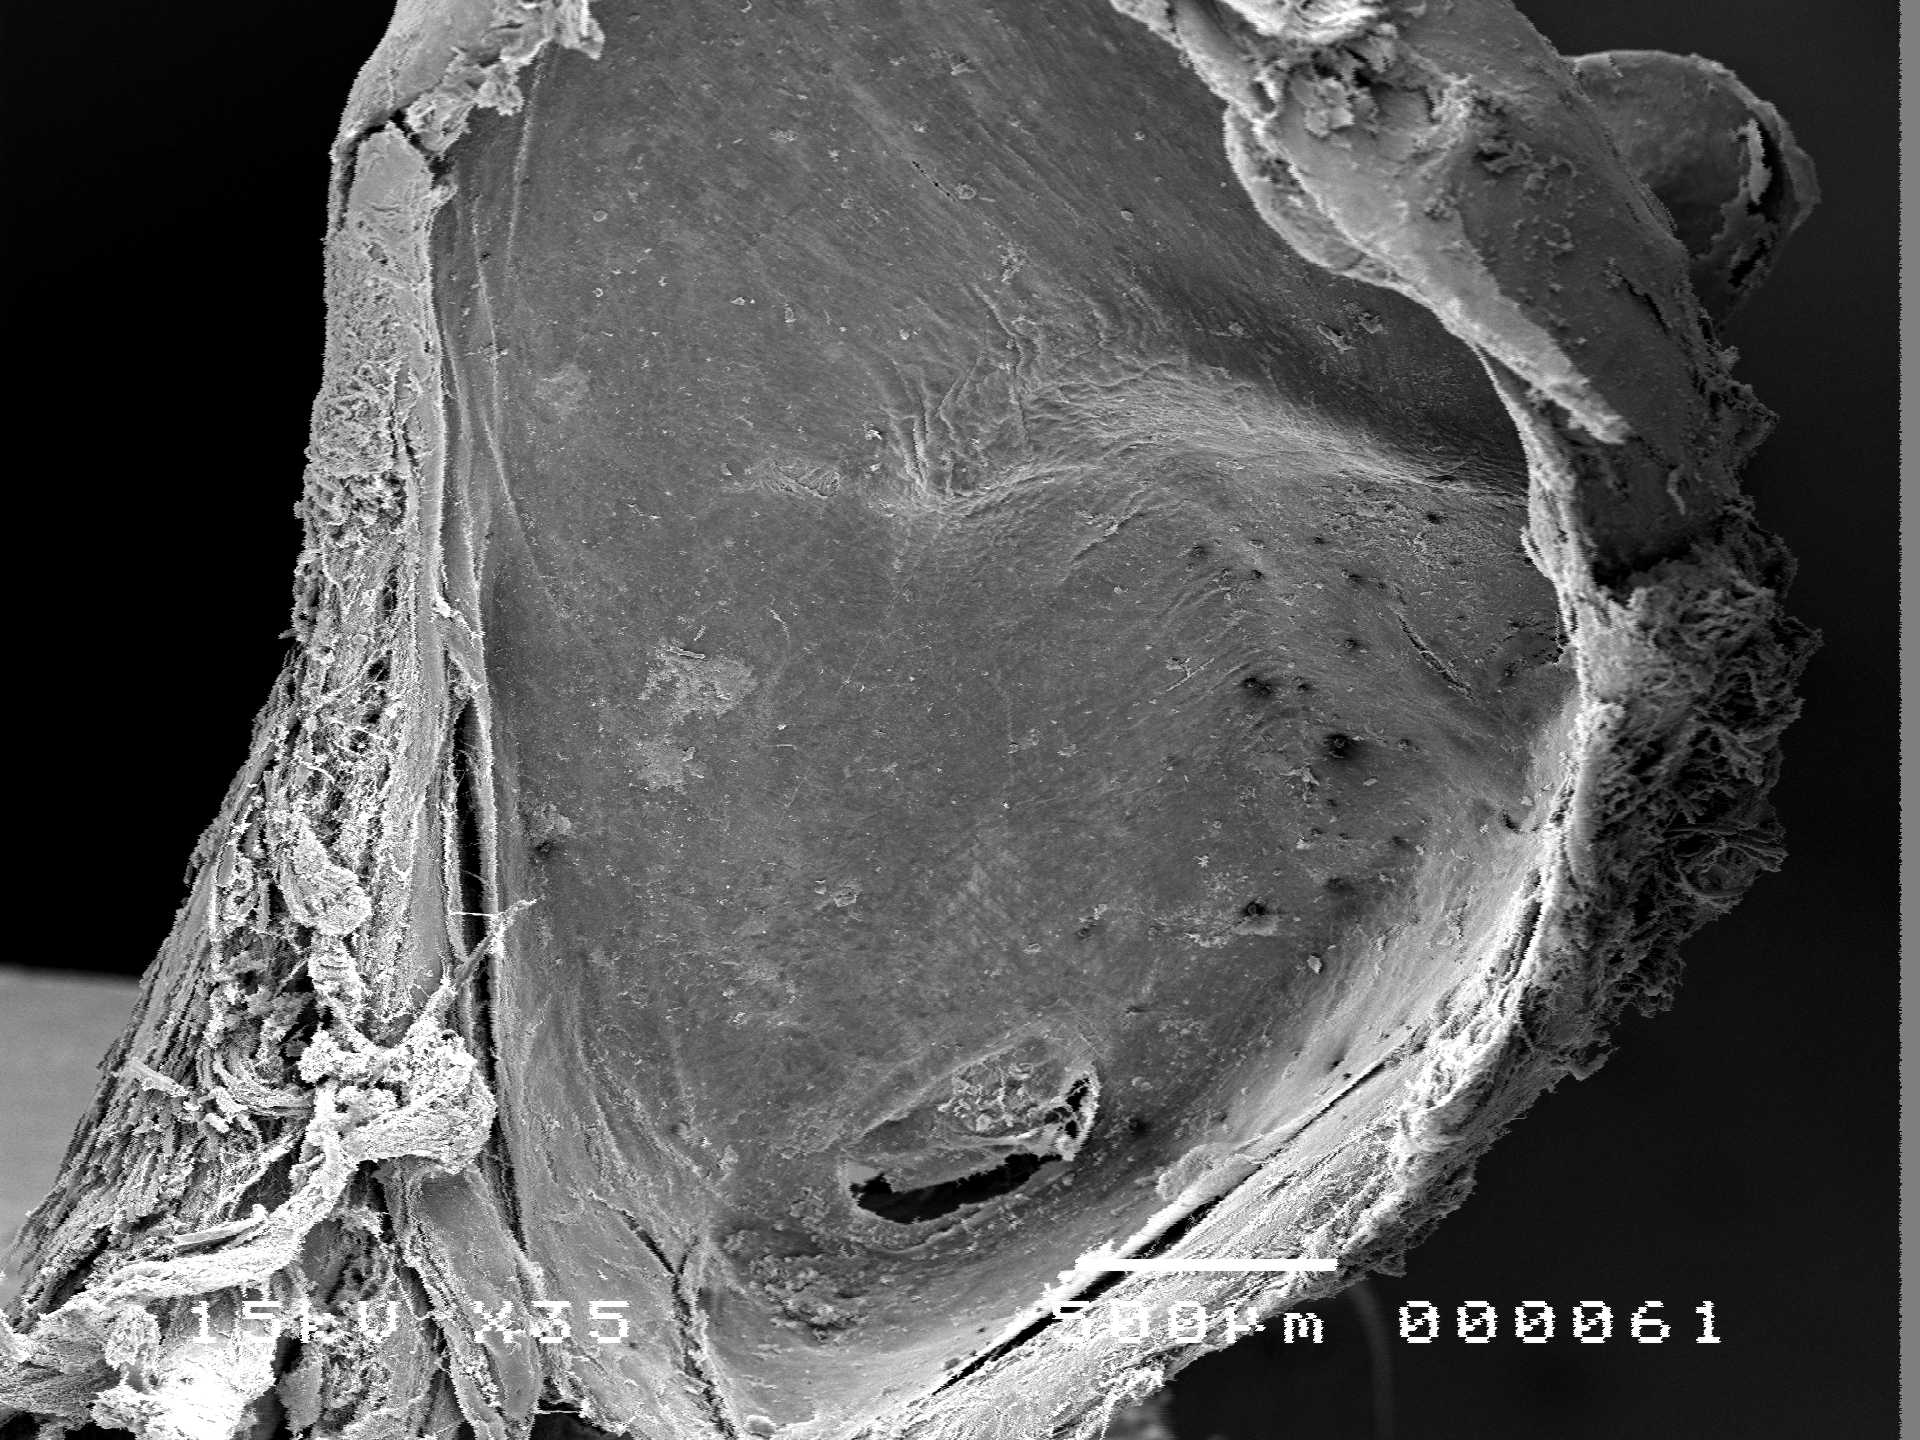 Scanning Electron Microscopy photo of the tympanum